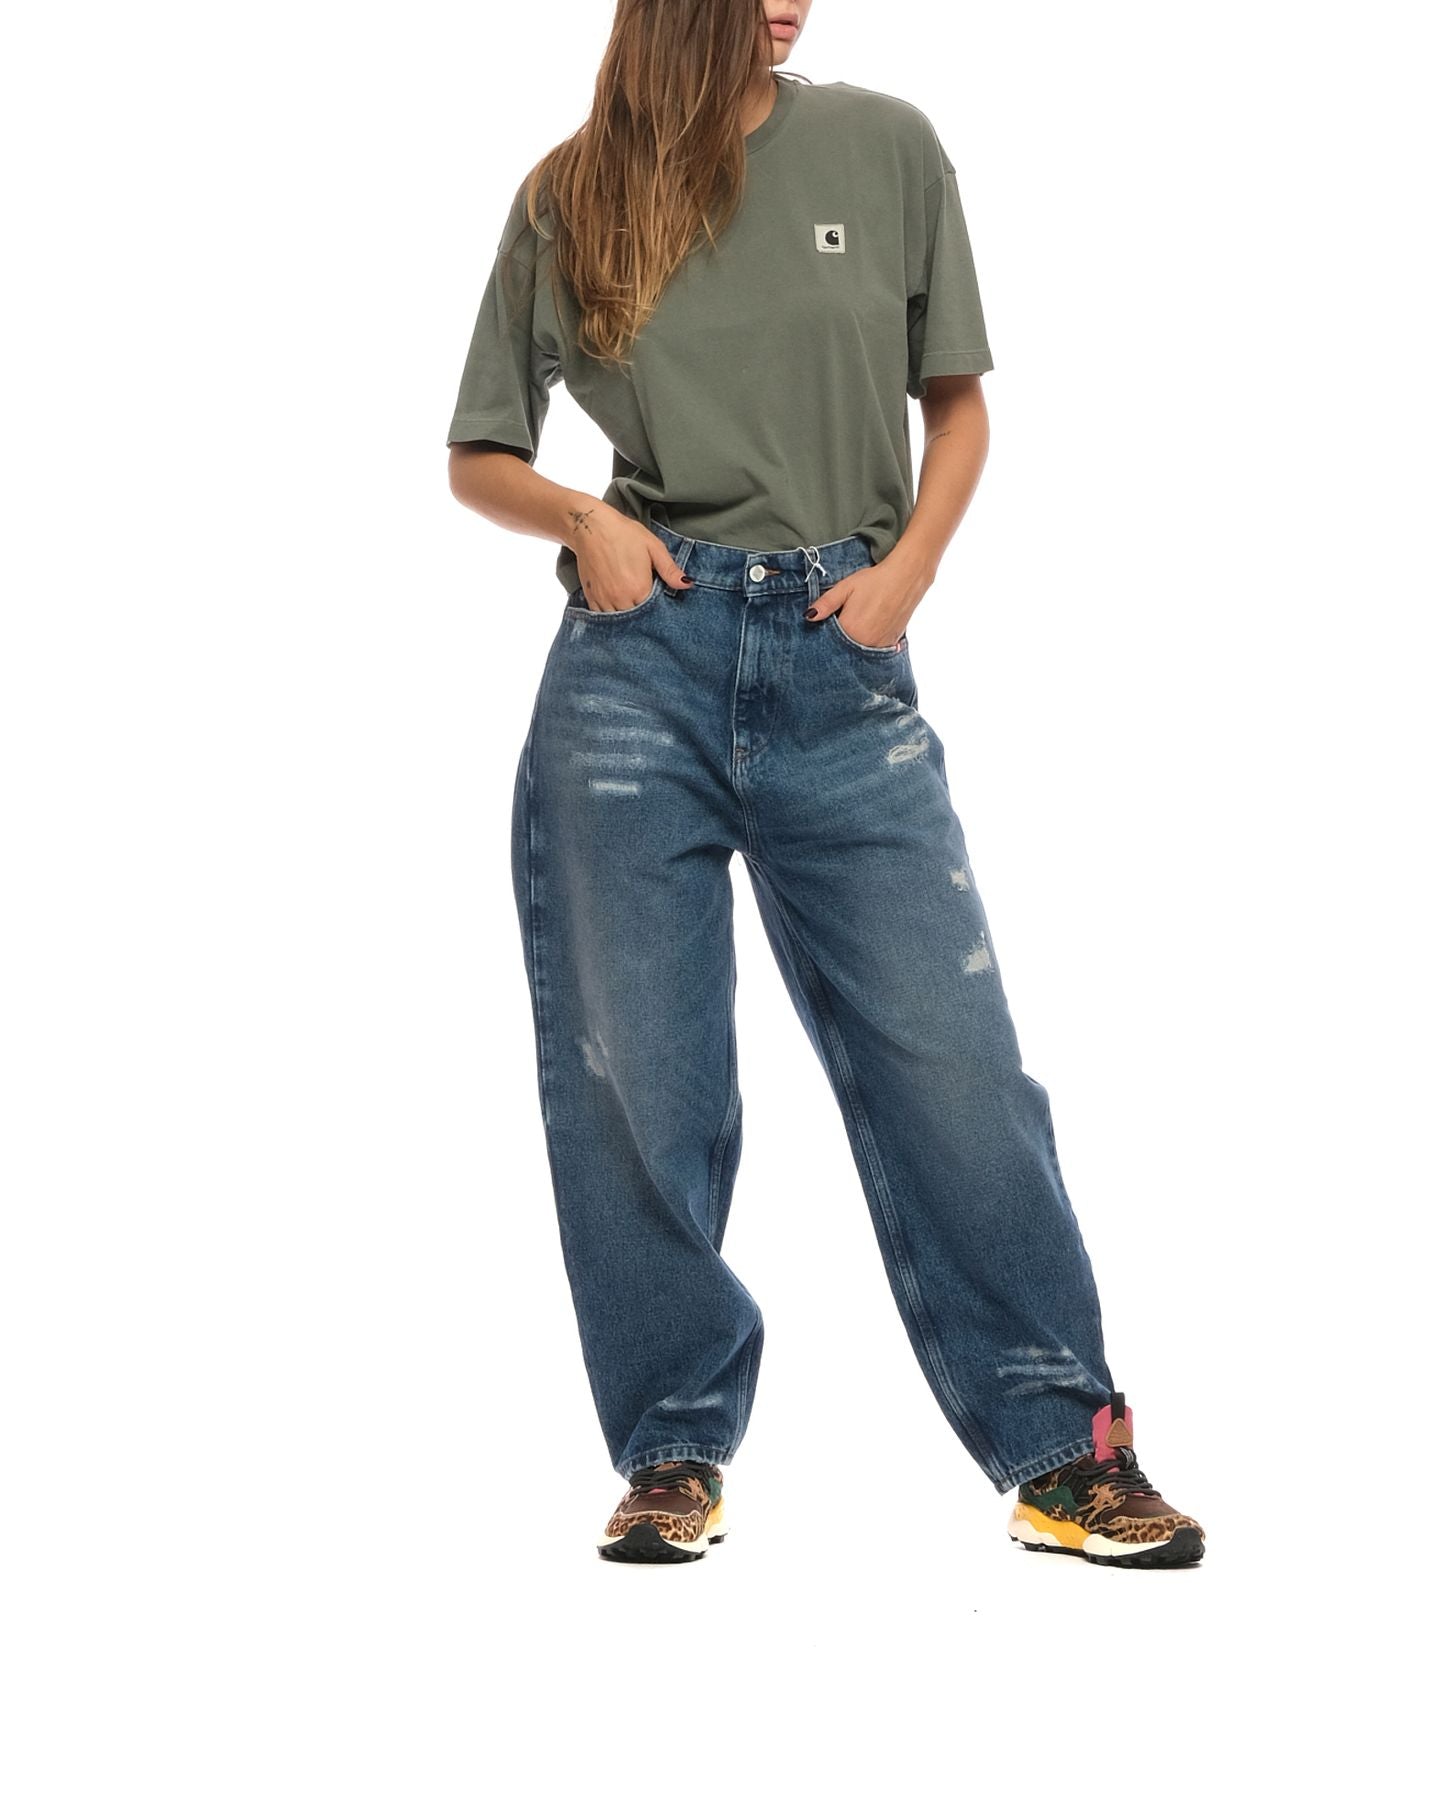 Jeans Woman AMD047D4352388 999 Denim Amish